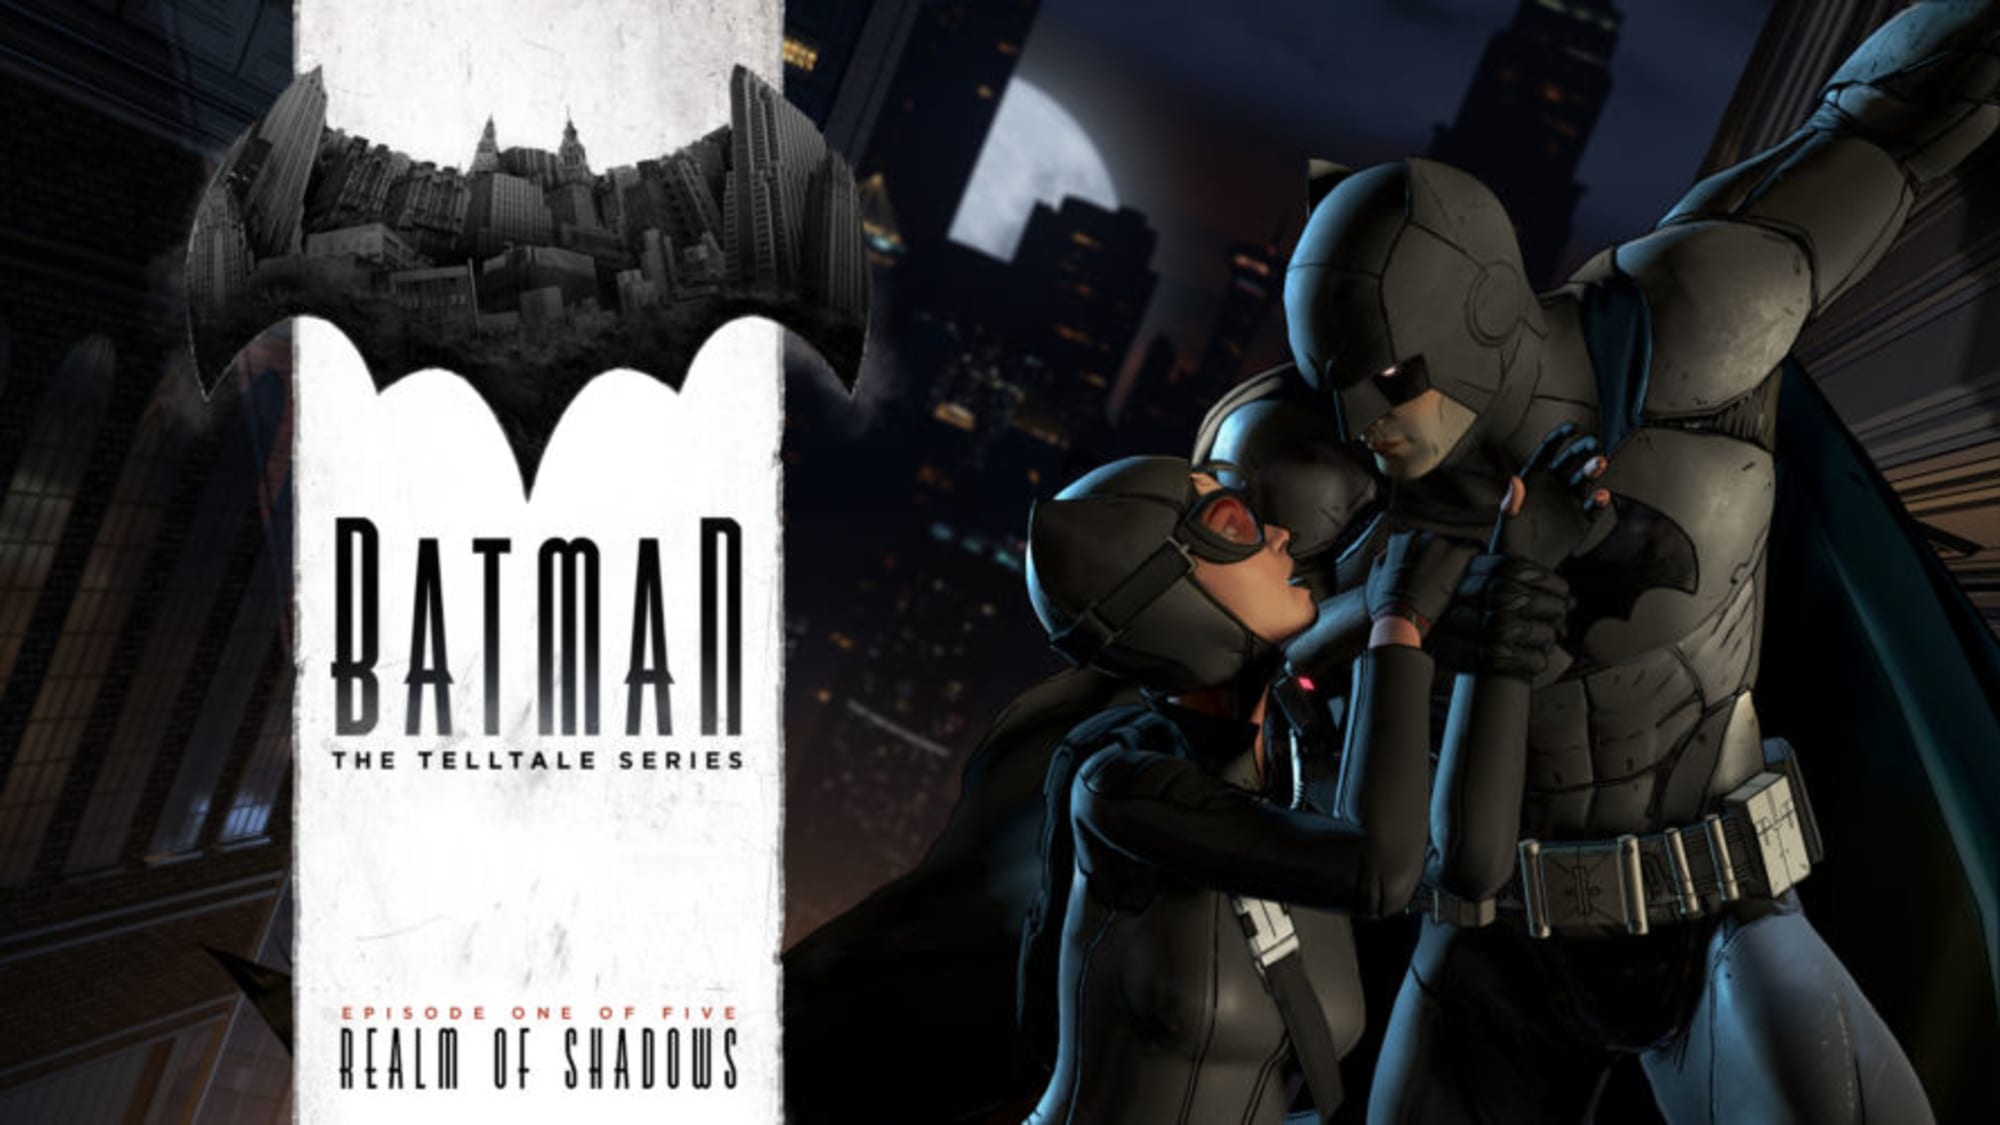 Batman Telltale Series Review: Ep 1 Realm of Shadows